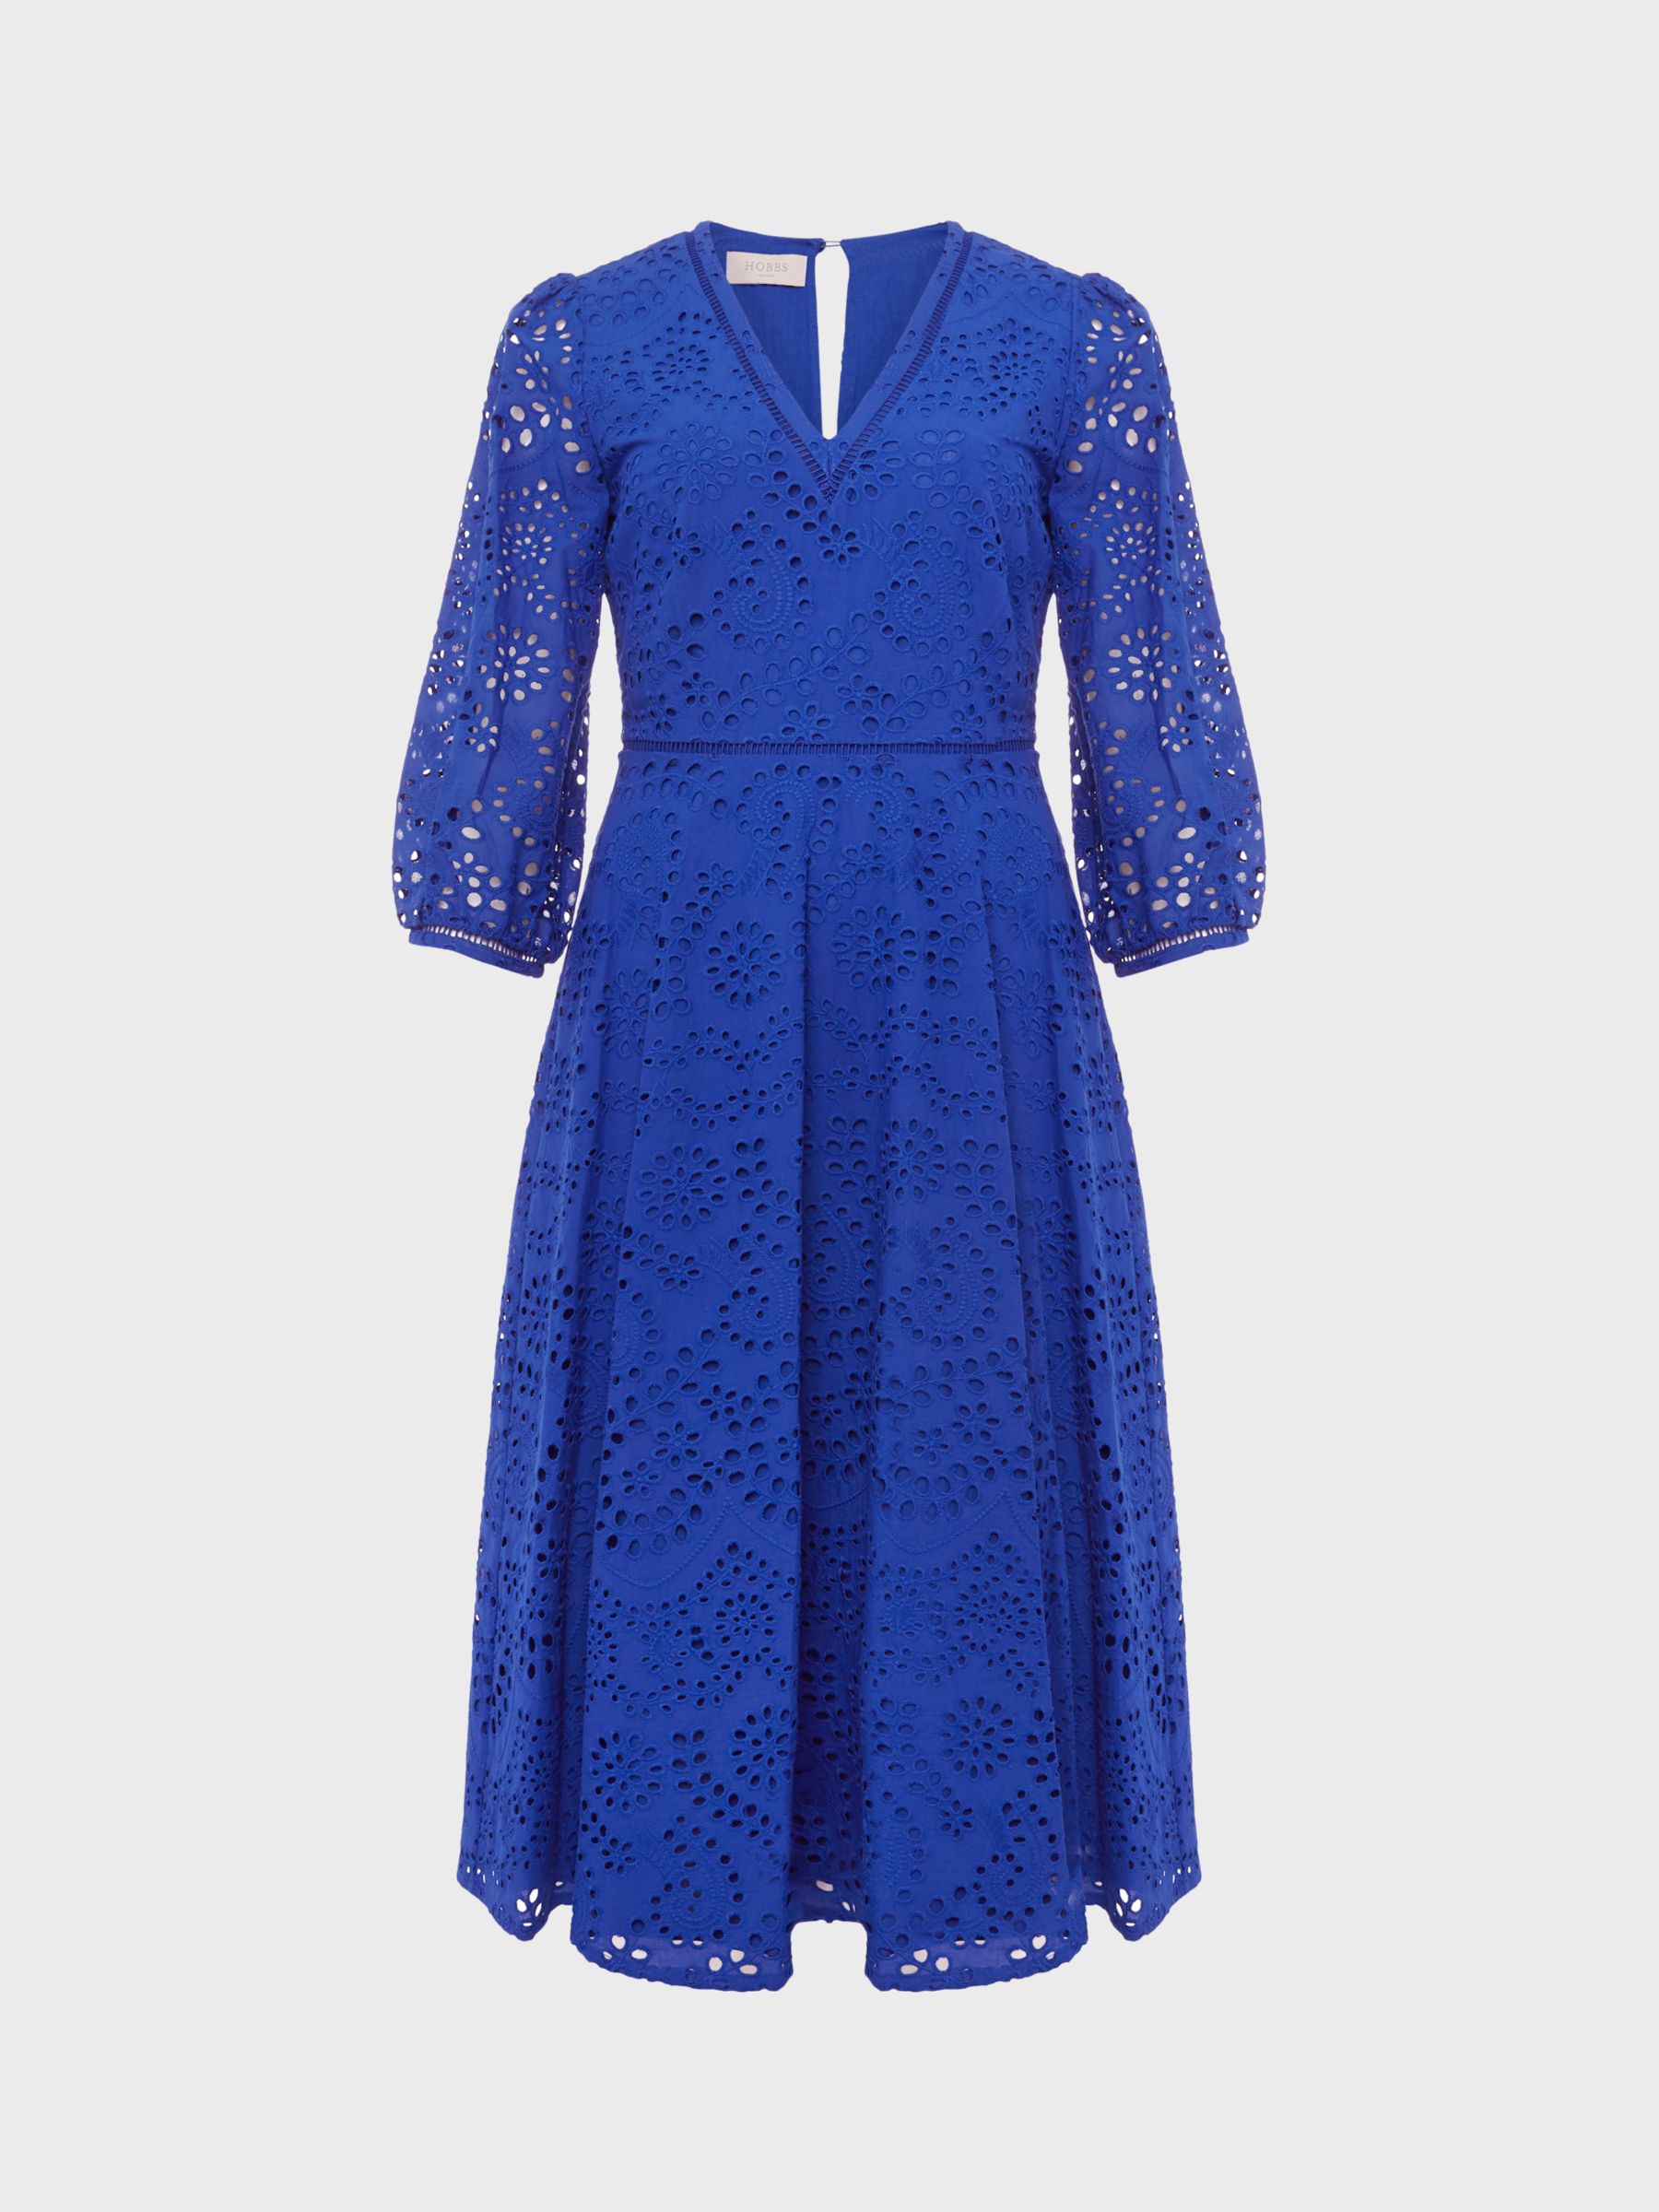 Hobbs Rhea Broderie Anglaise Cotton Dress, Cobalt Blue at John Lewis ...